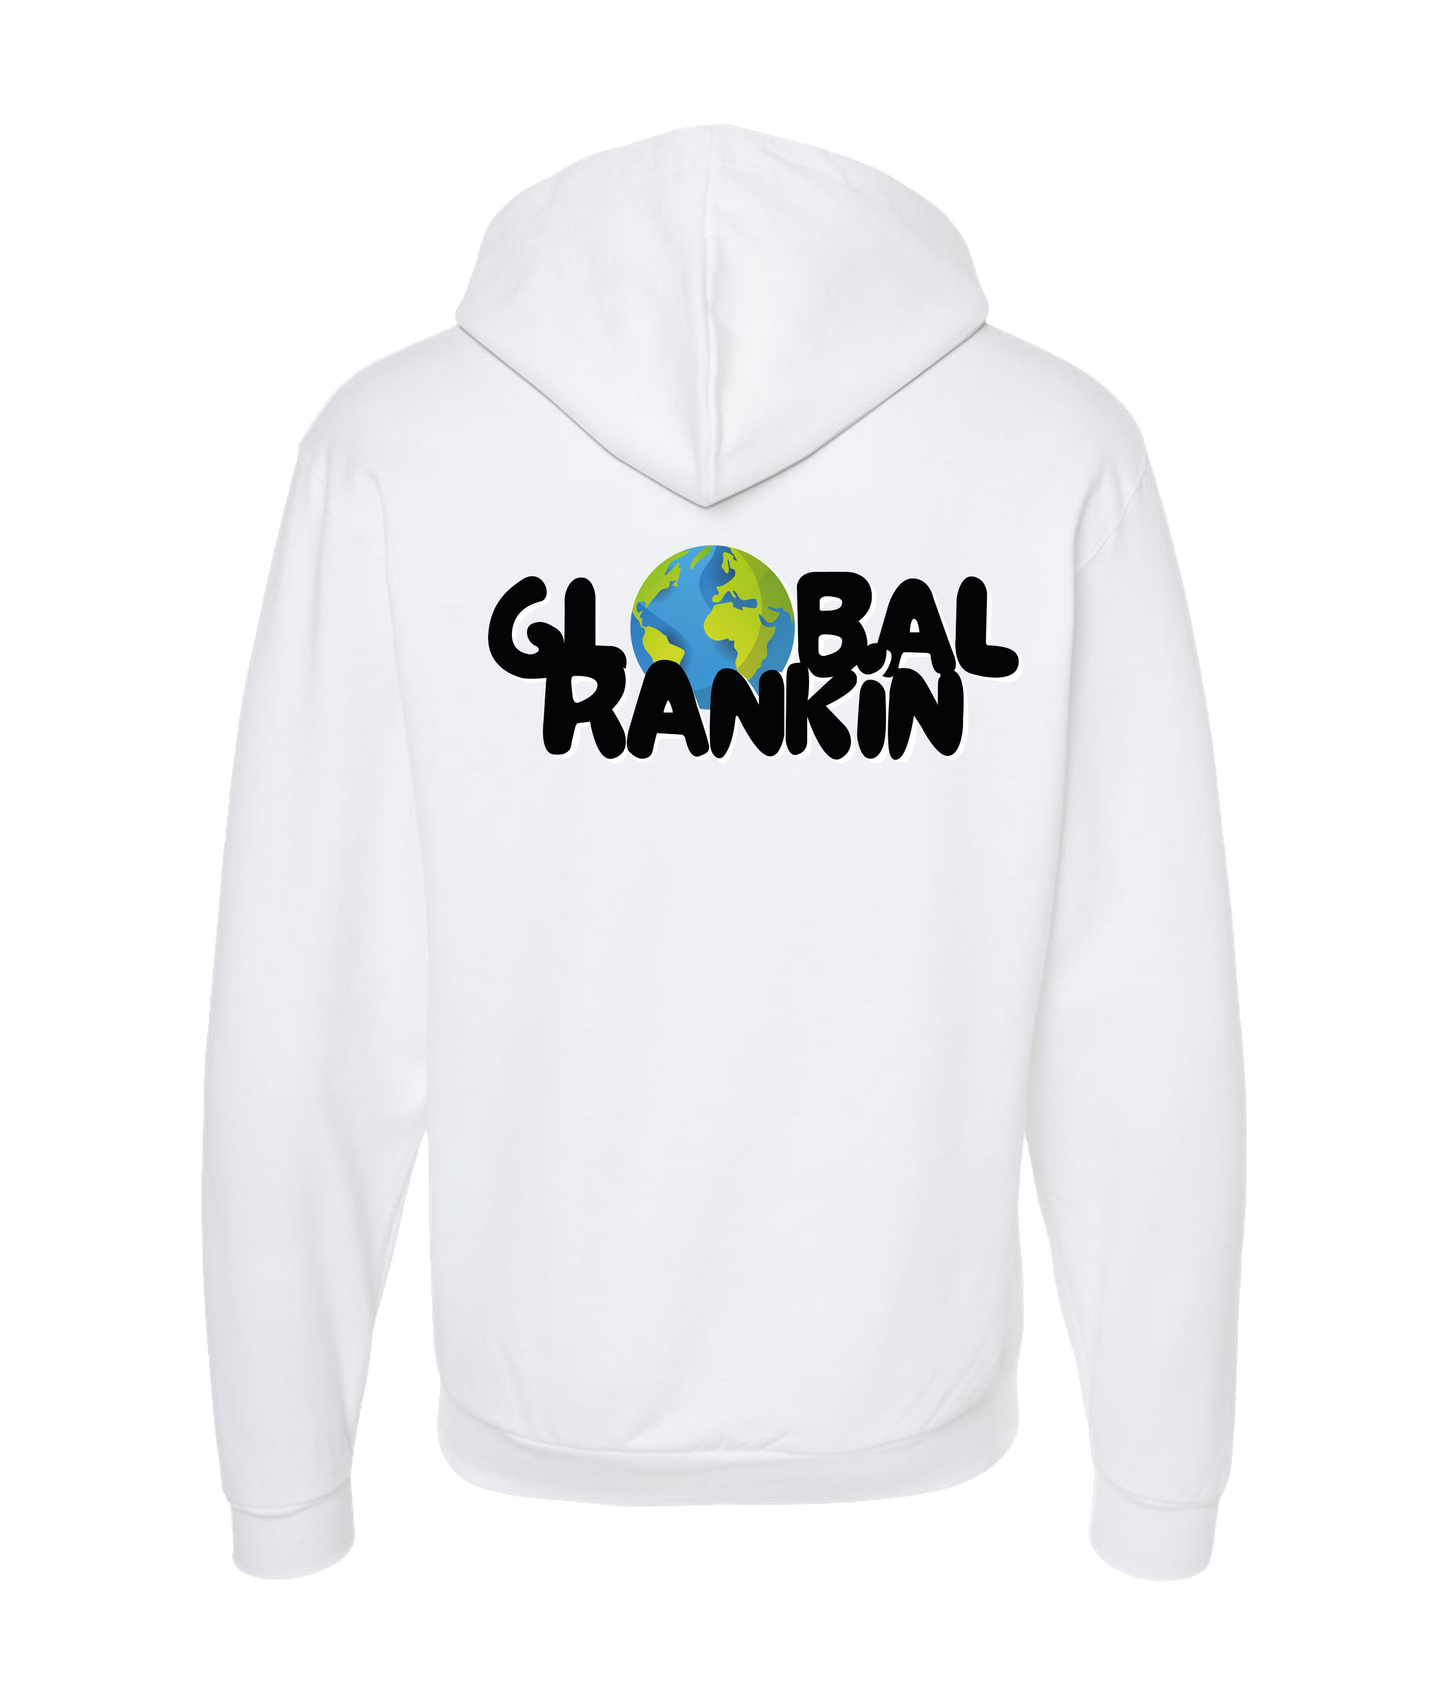 Global Rankin - Logo - White Zip Up Hoodie